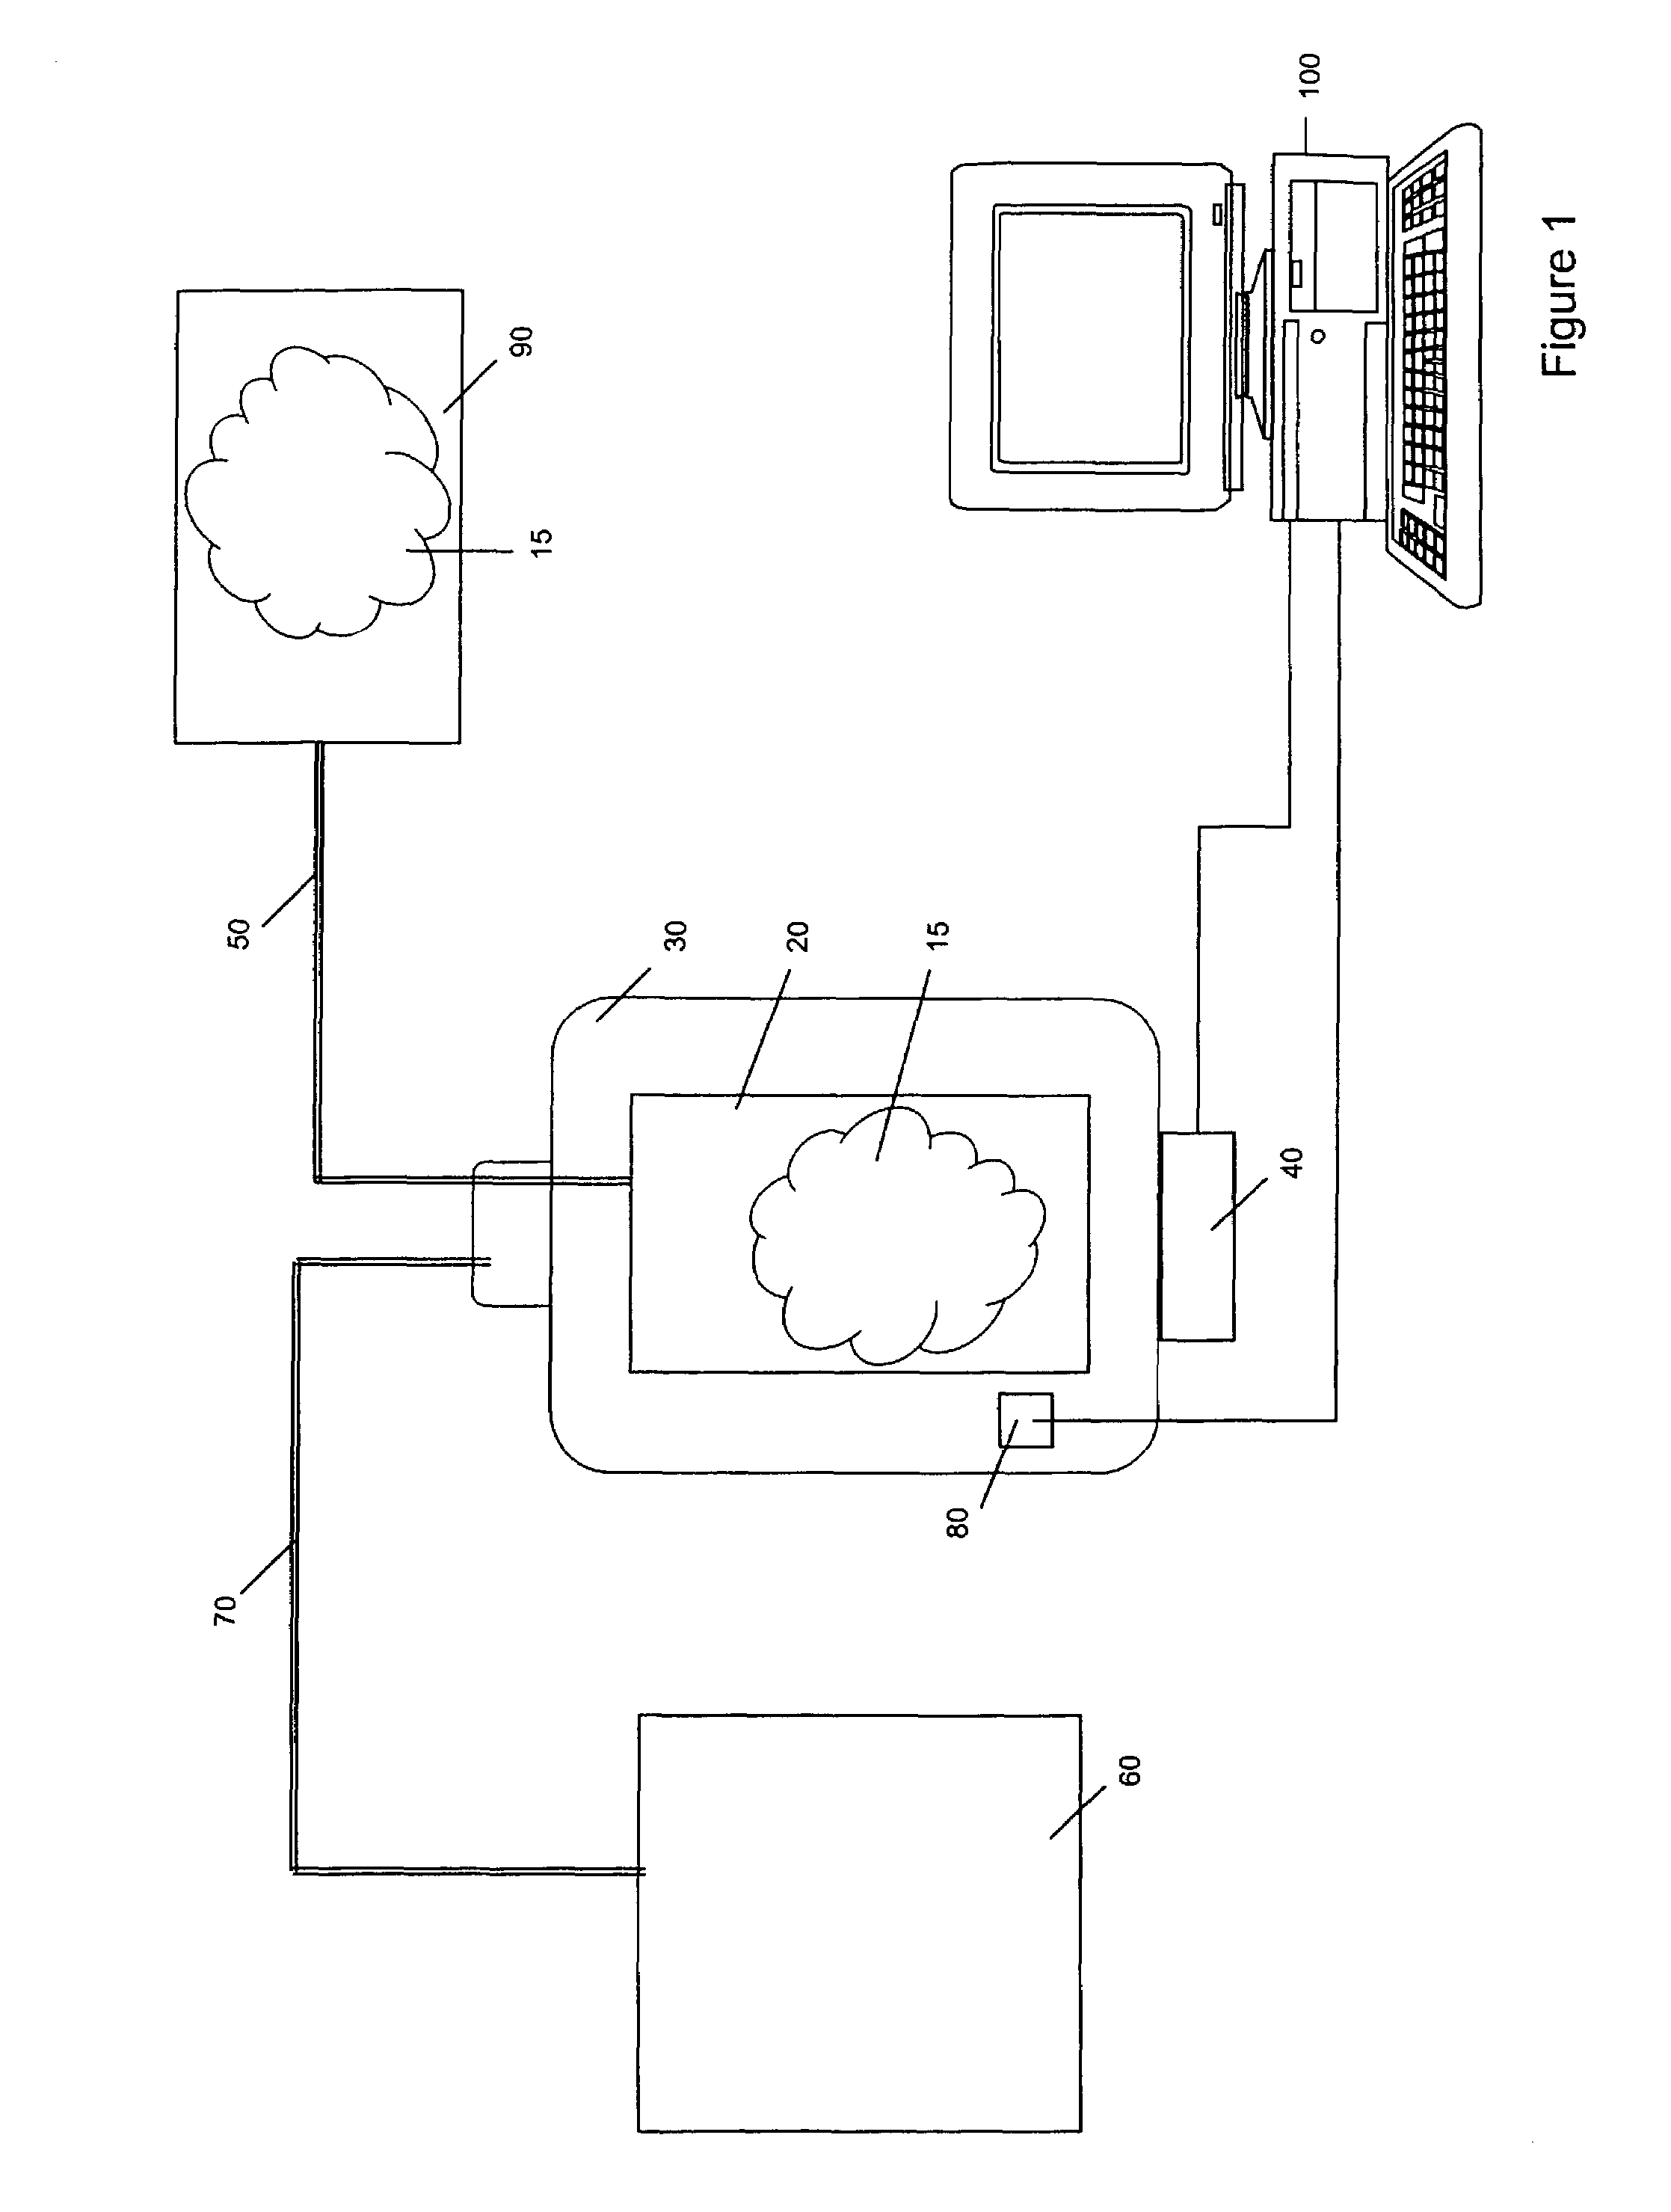 Uninterrupted flow pump apparatus and method